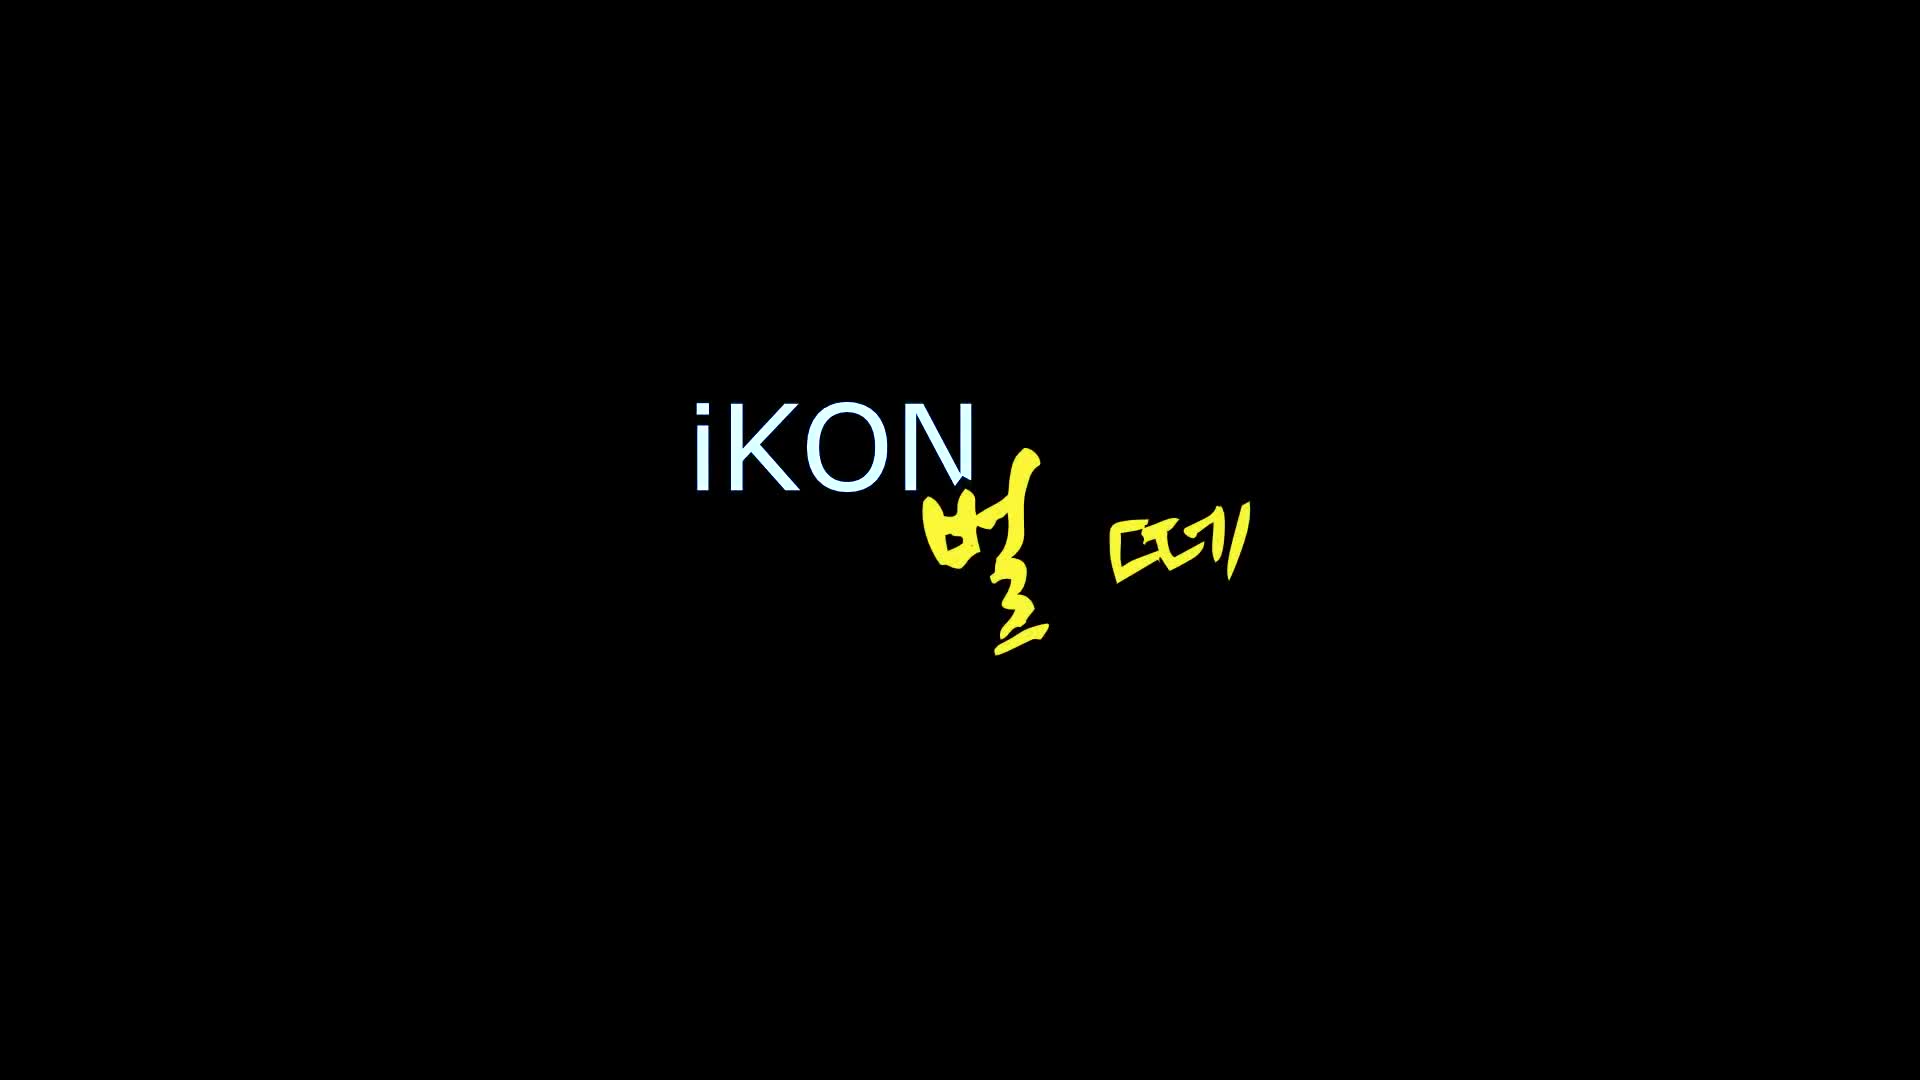 iKON – 벌떼 (B-DAY) 아이콘 cover dance WAVEYA 웨이브야